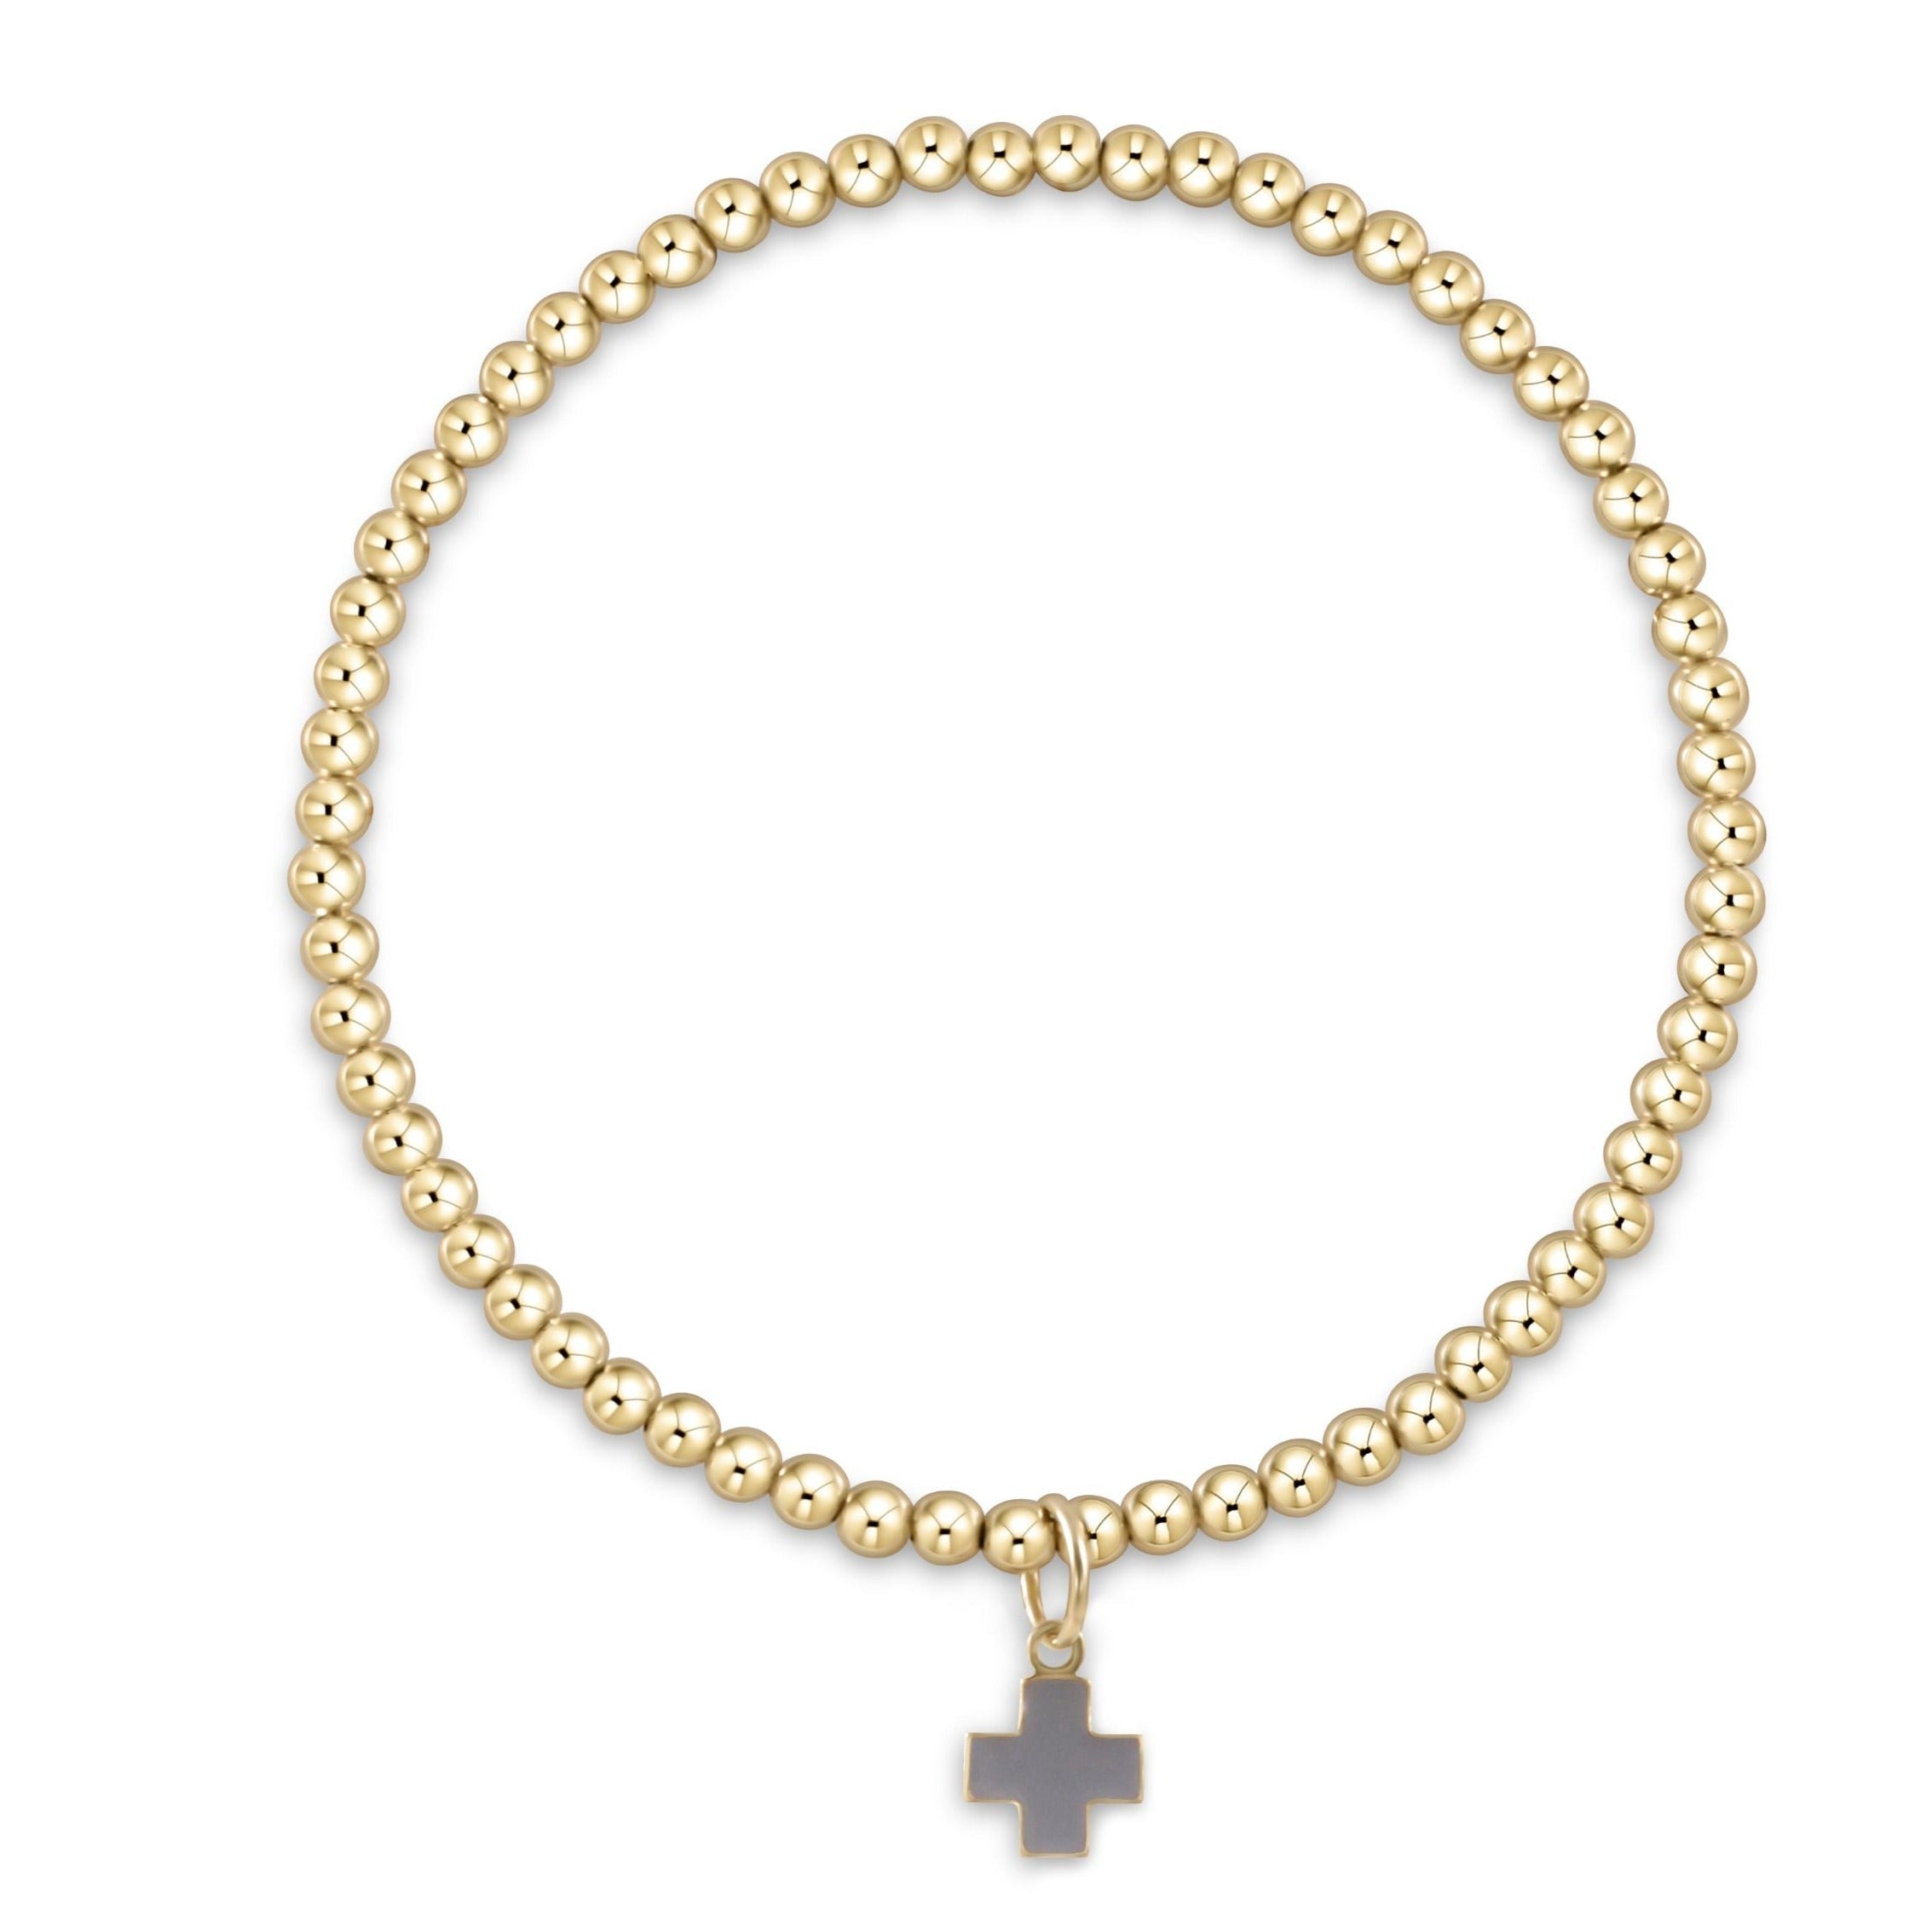 Signature Cross Gold Charm Bracelet, 3mm